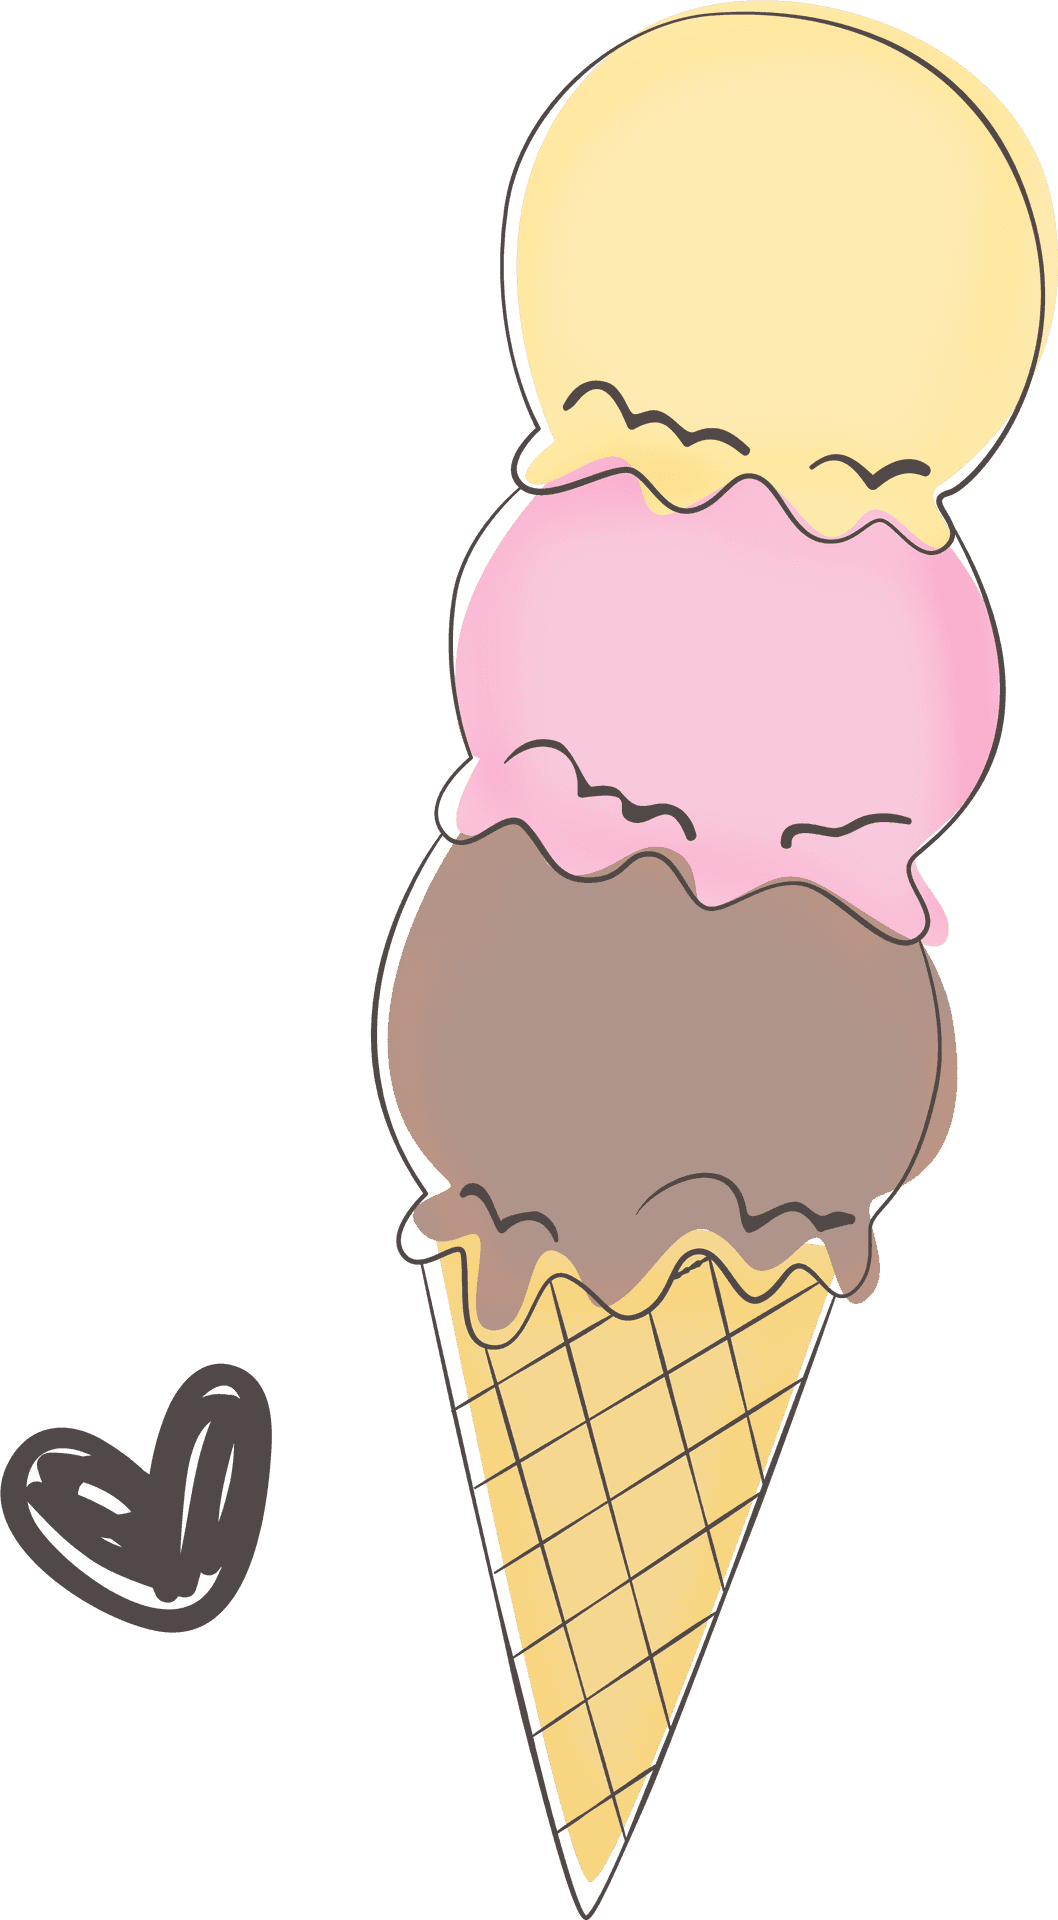 Triple Scoop Ice Cream Cone PNG